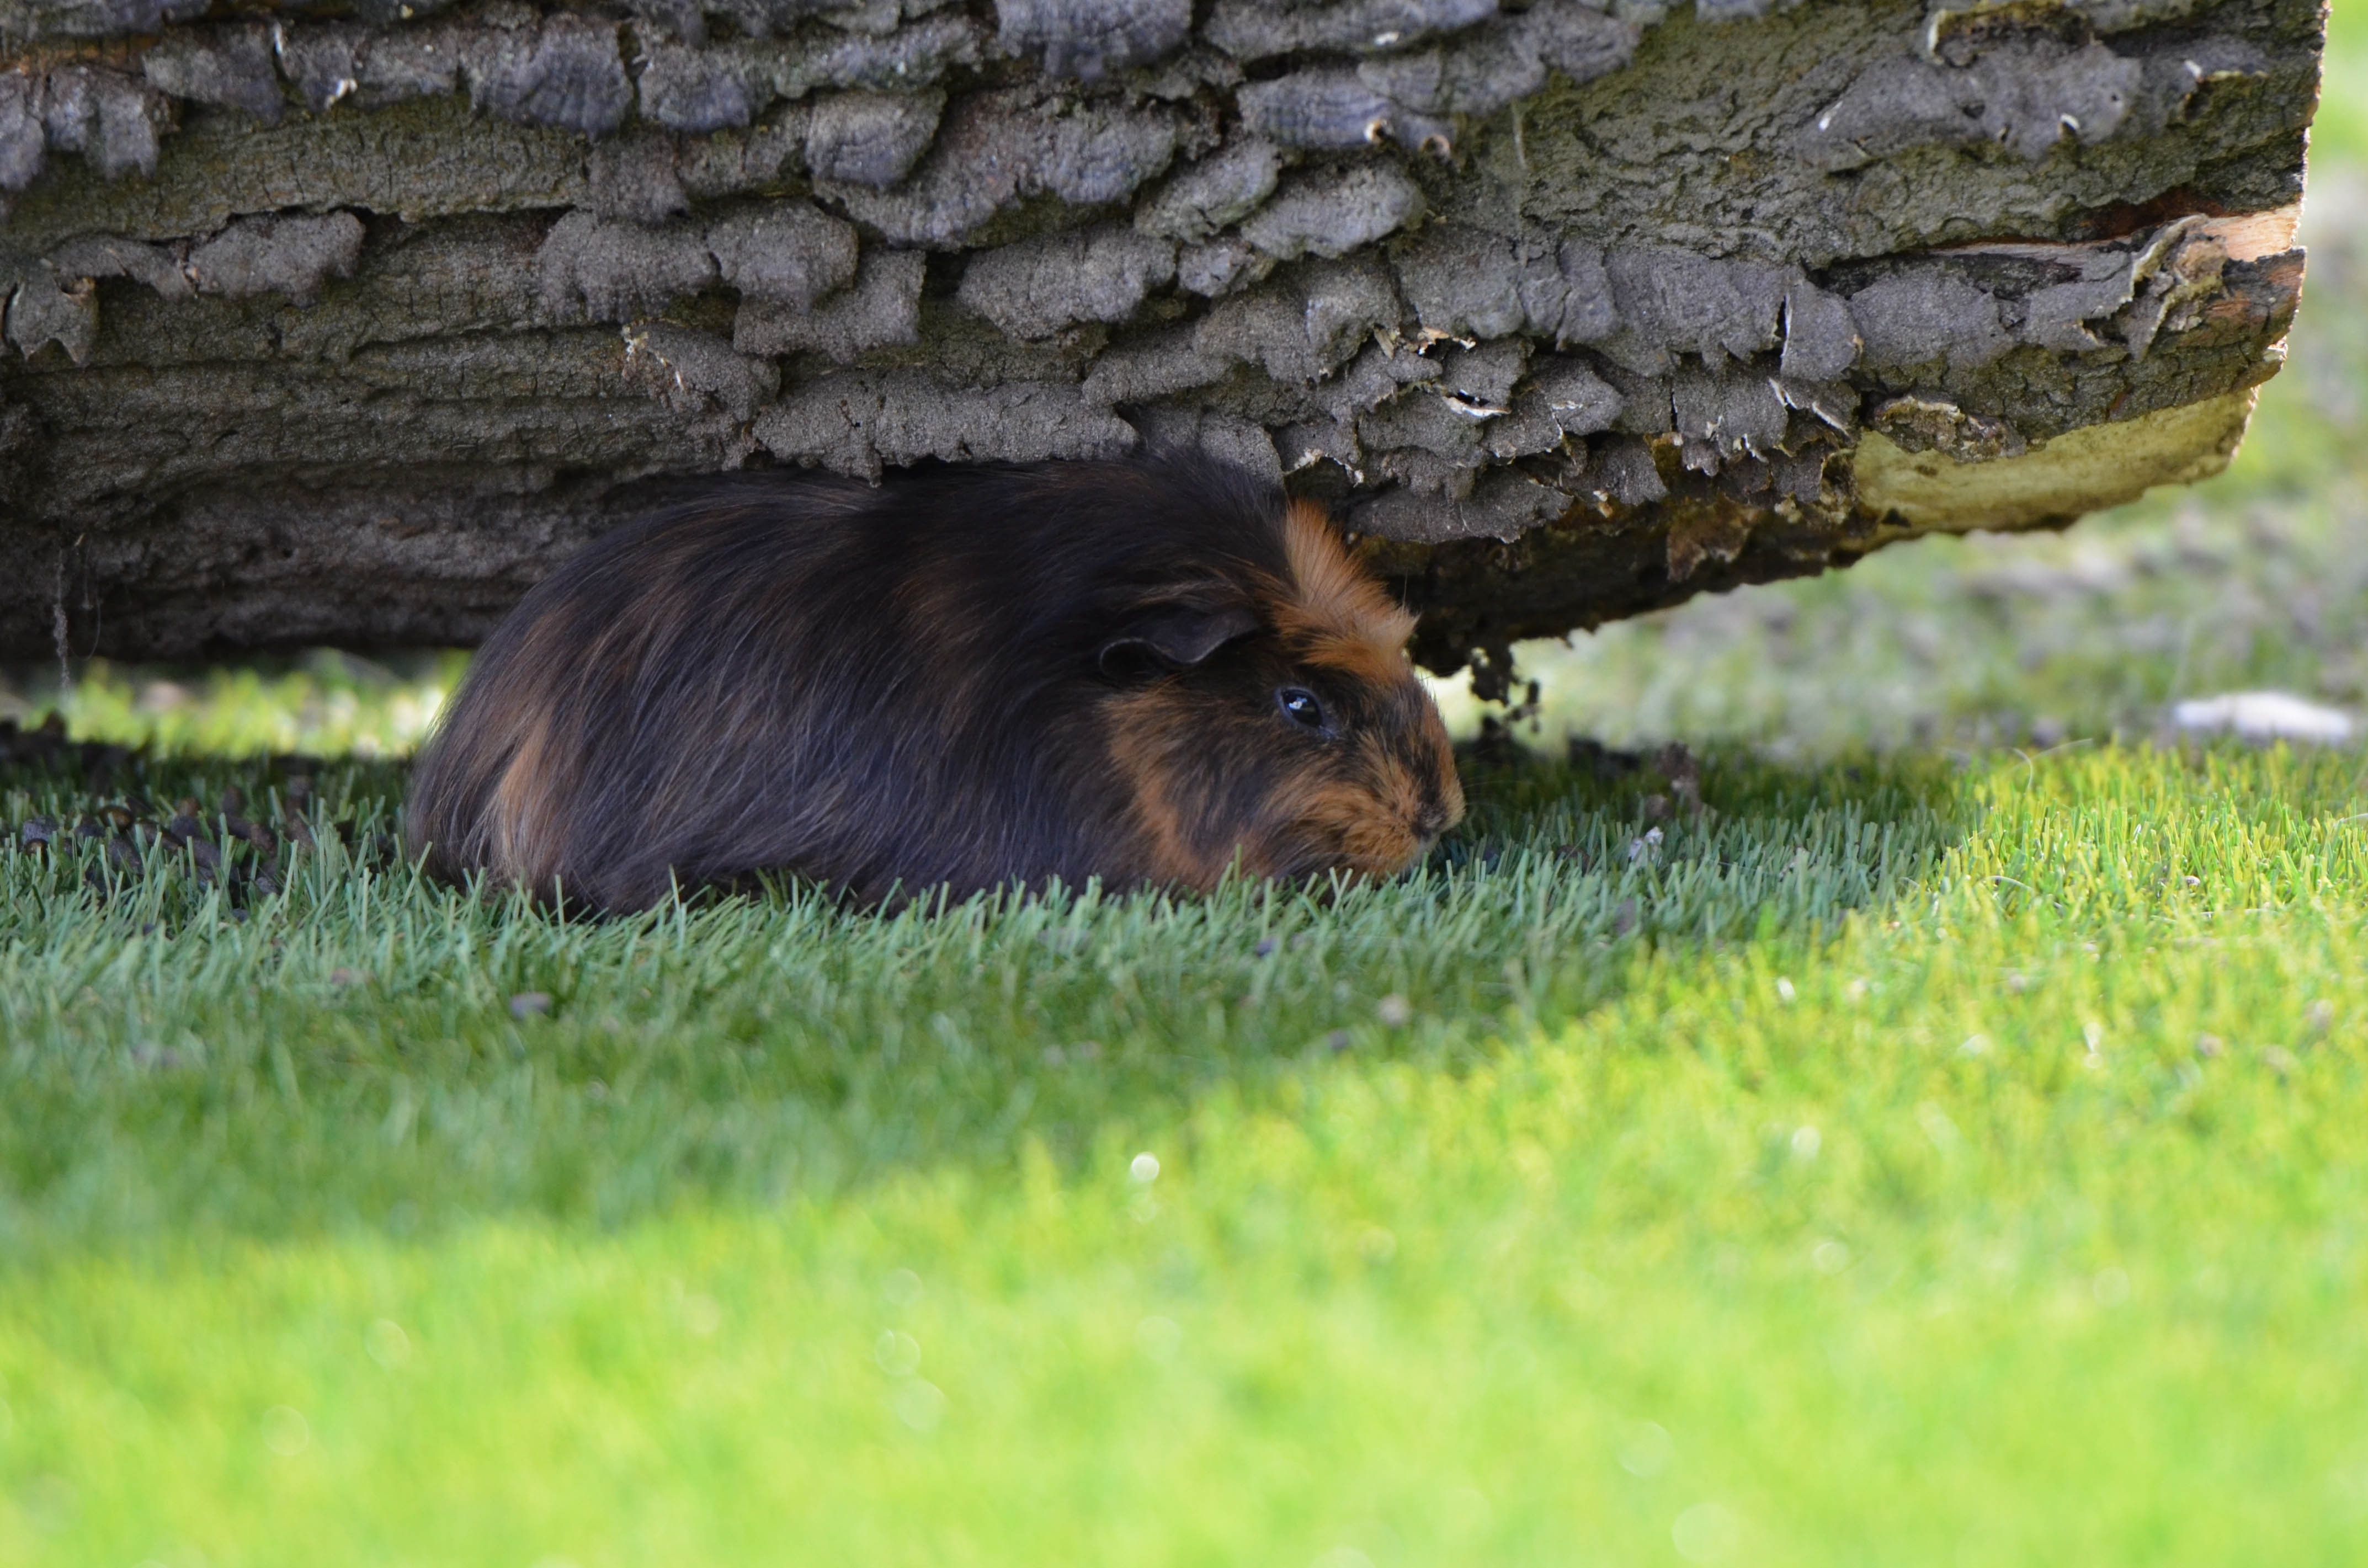 guinea pig under tree trunk